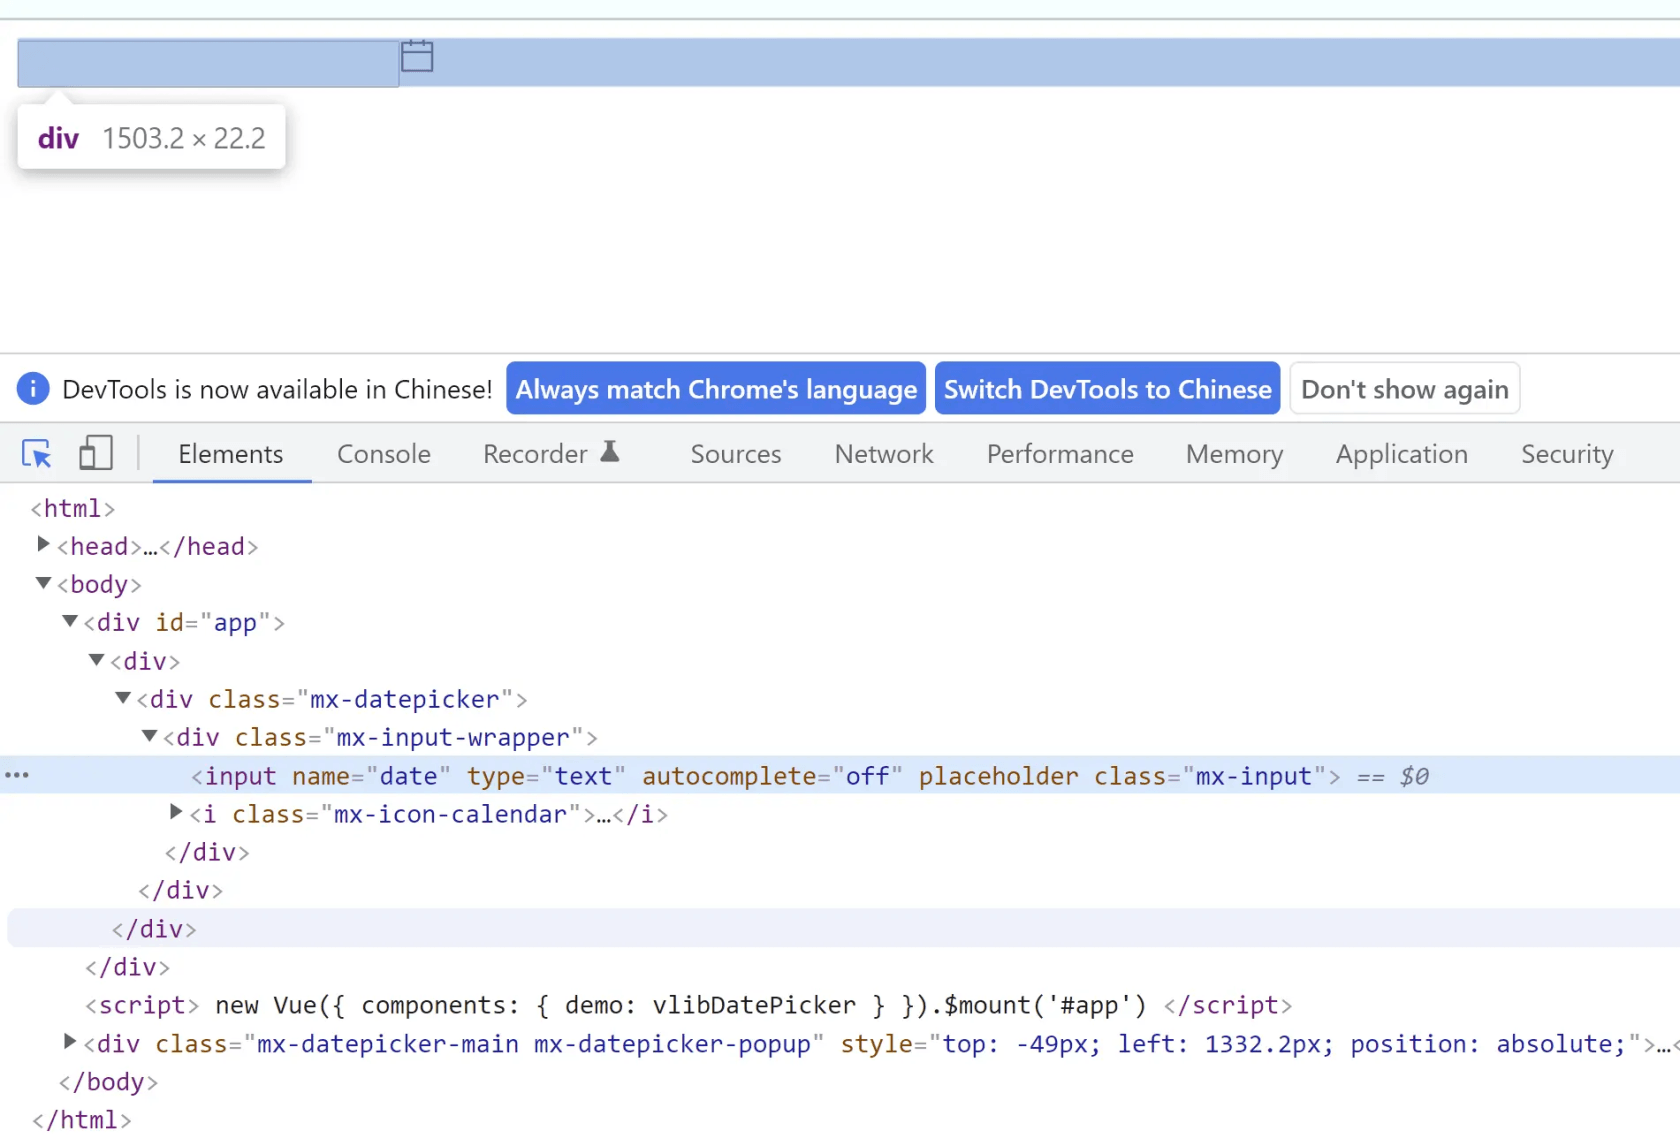 vue-cli按照库模式构建vue组件，html标签类名和css样式类名不一致的问题